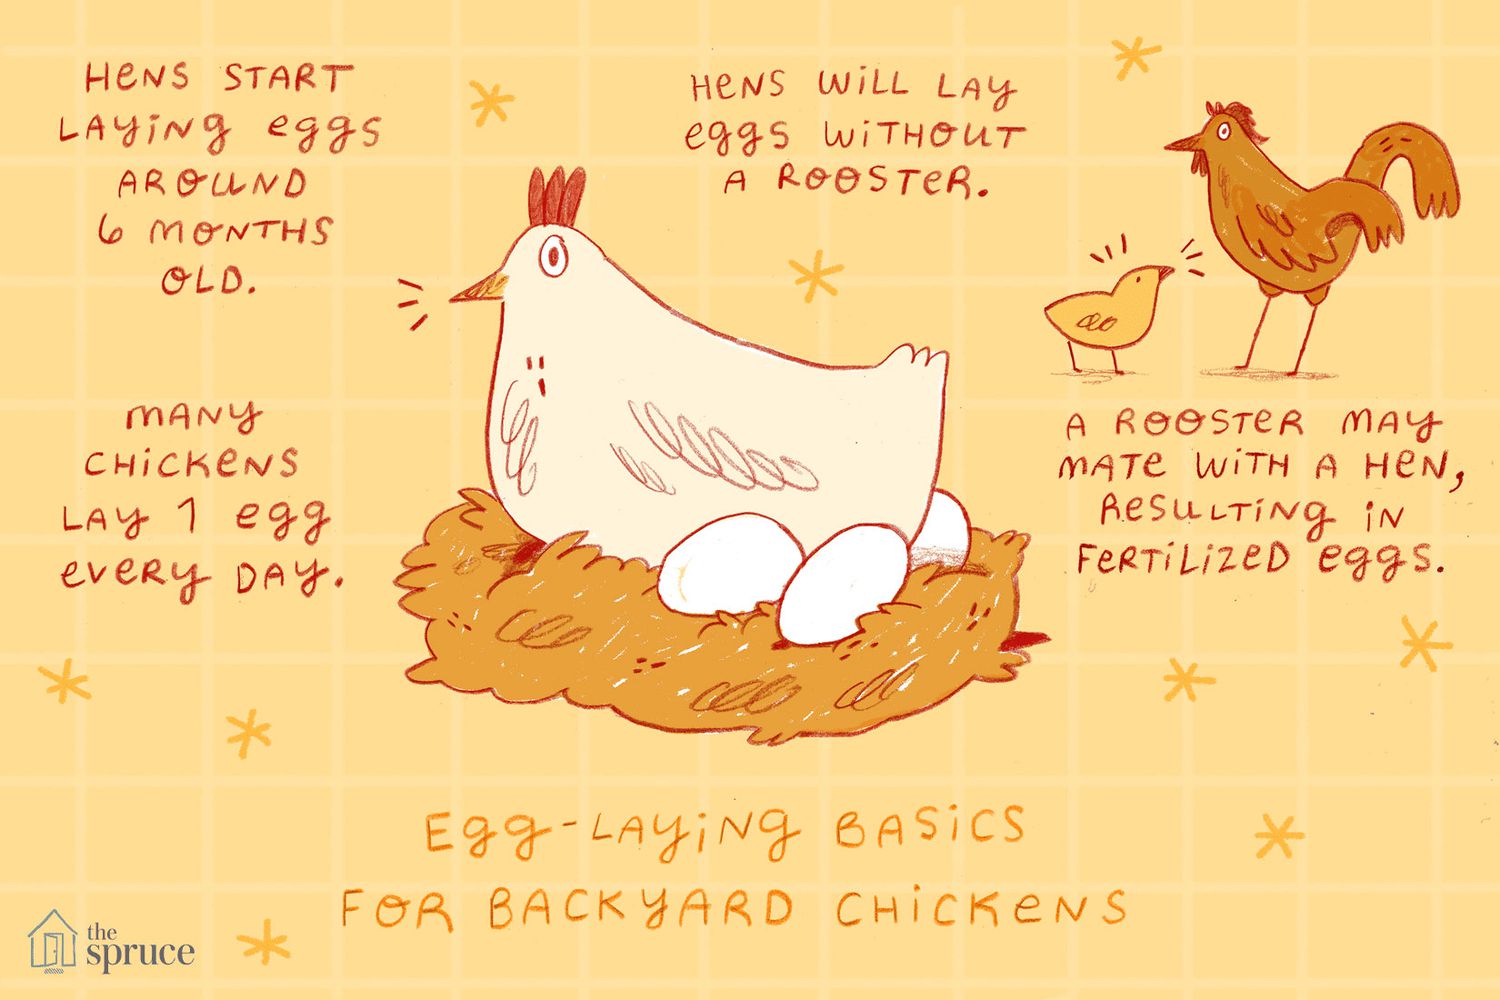 Why Do Hens Lay Eggs?